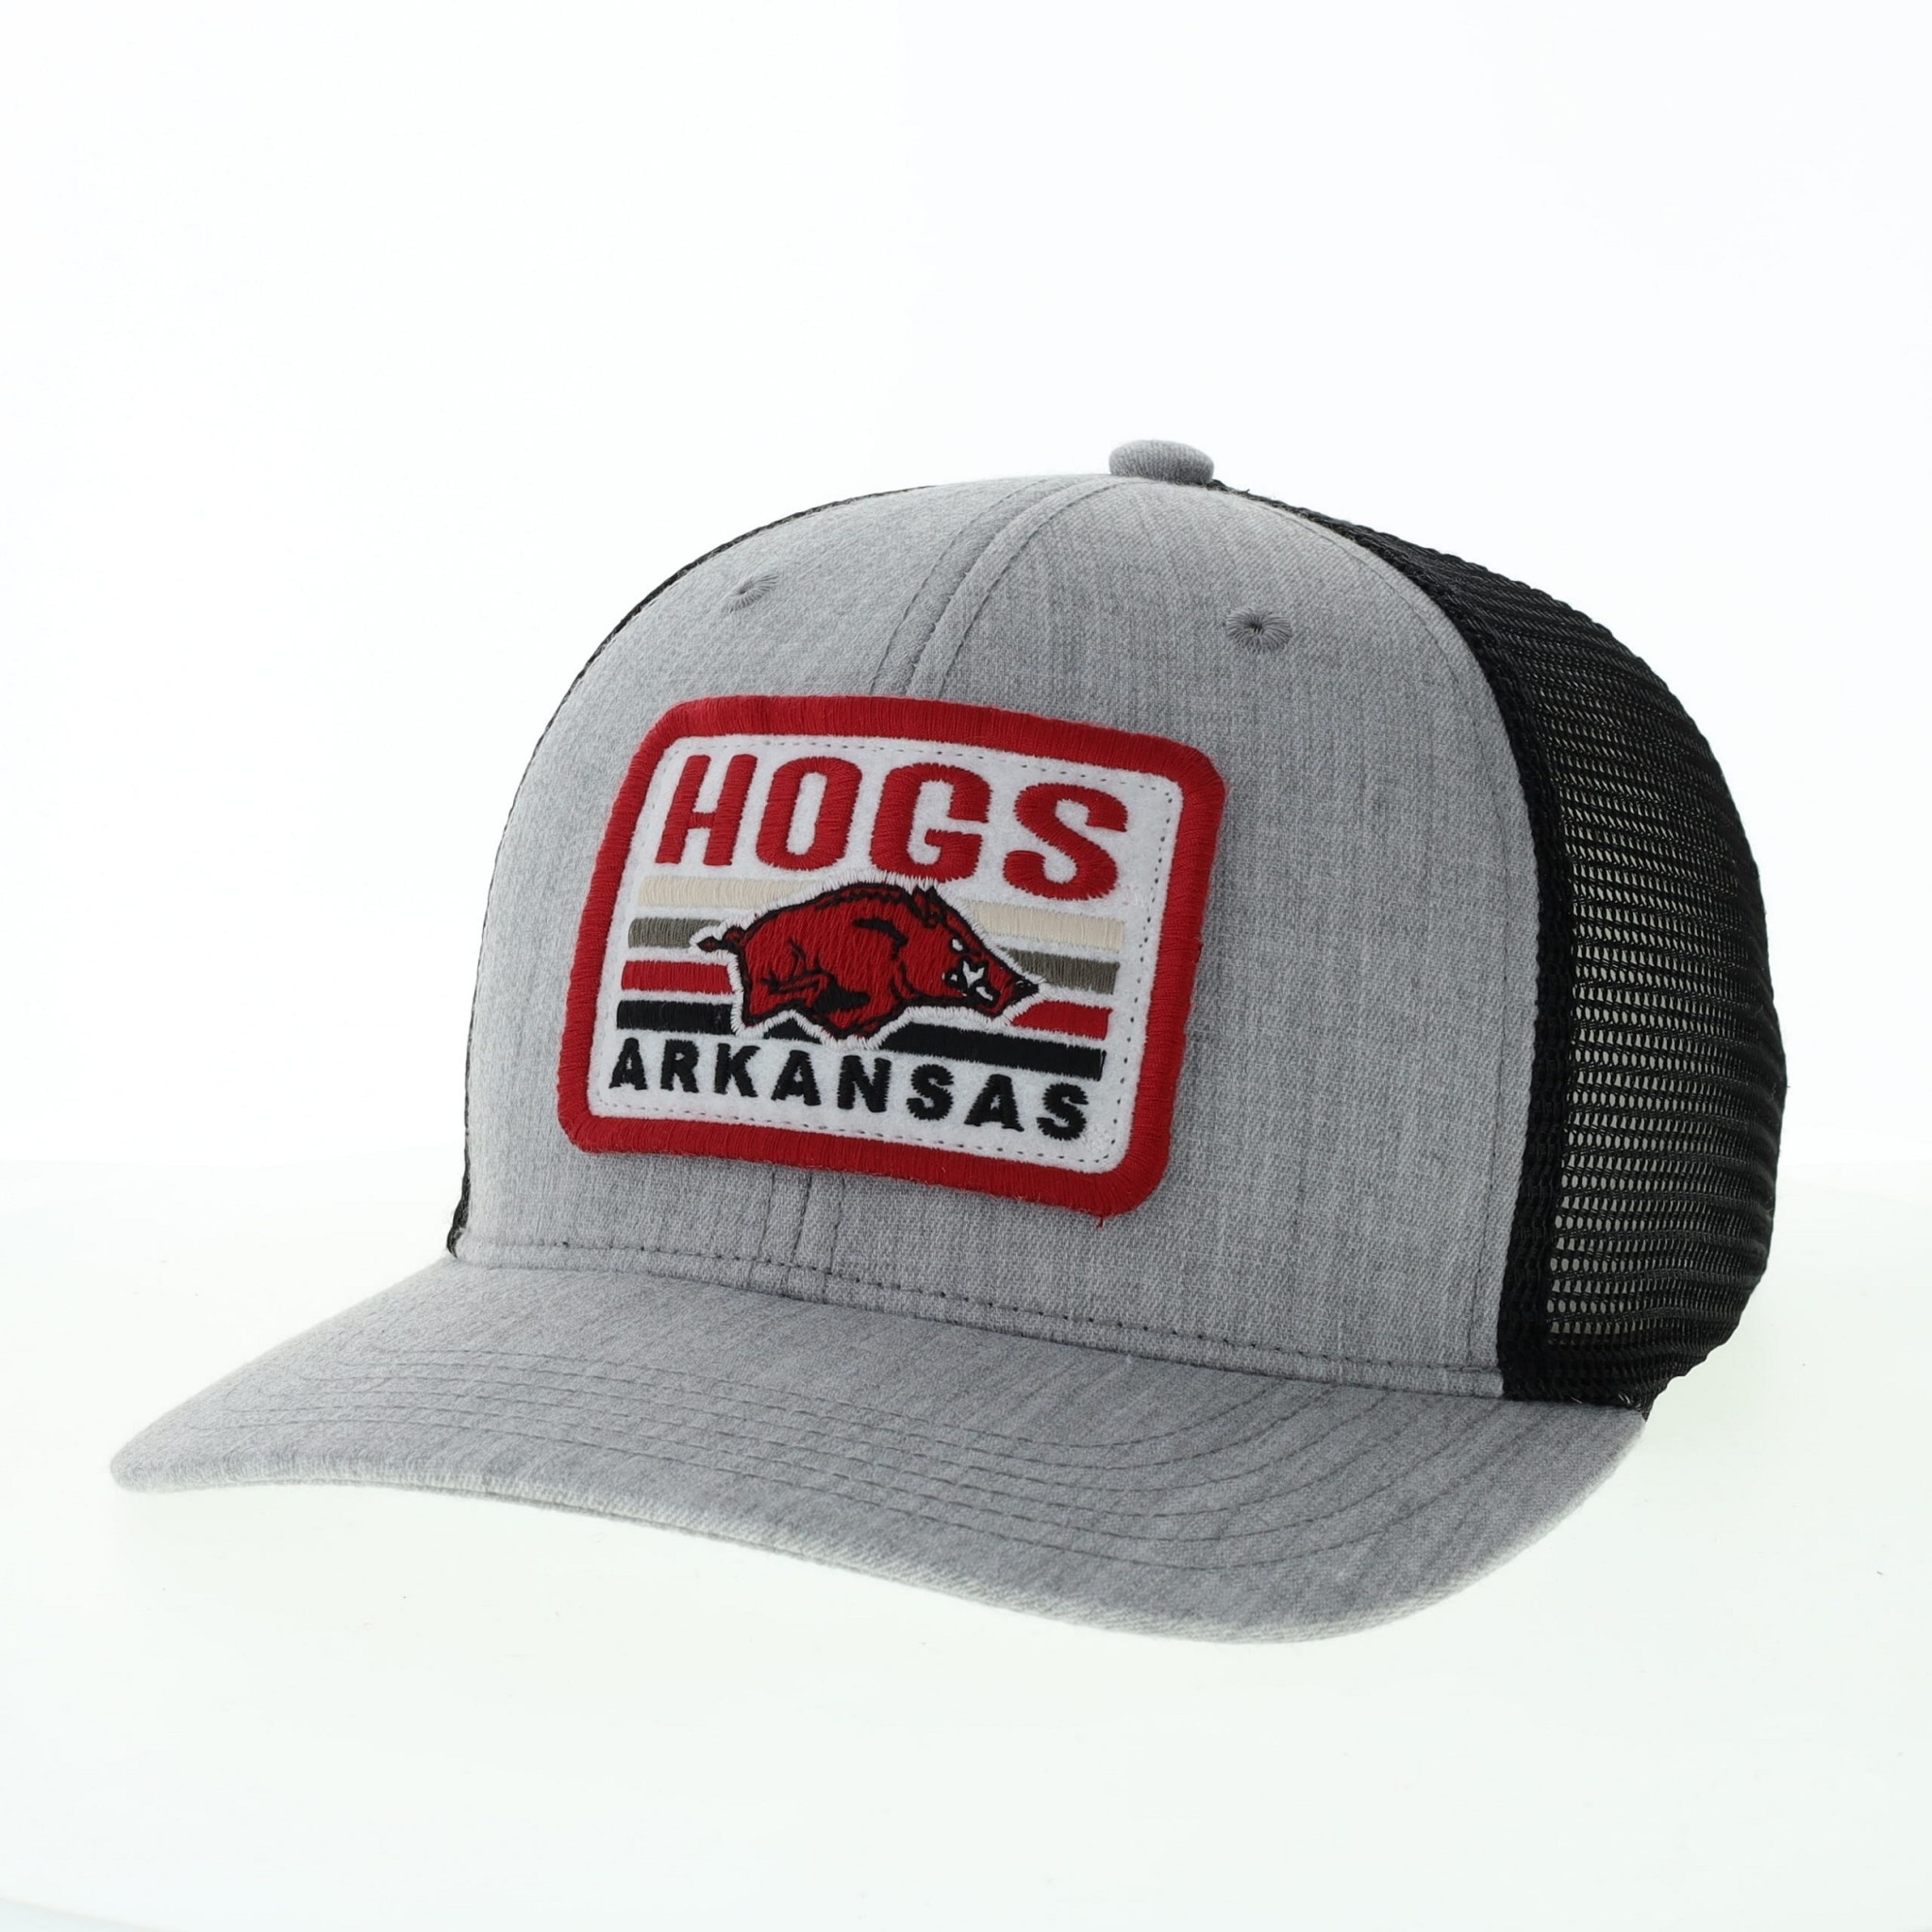 L2-League / Legacy HOGS Mid - Pro Snapback Patch Daybreak Hat